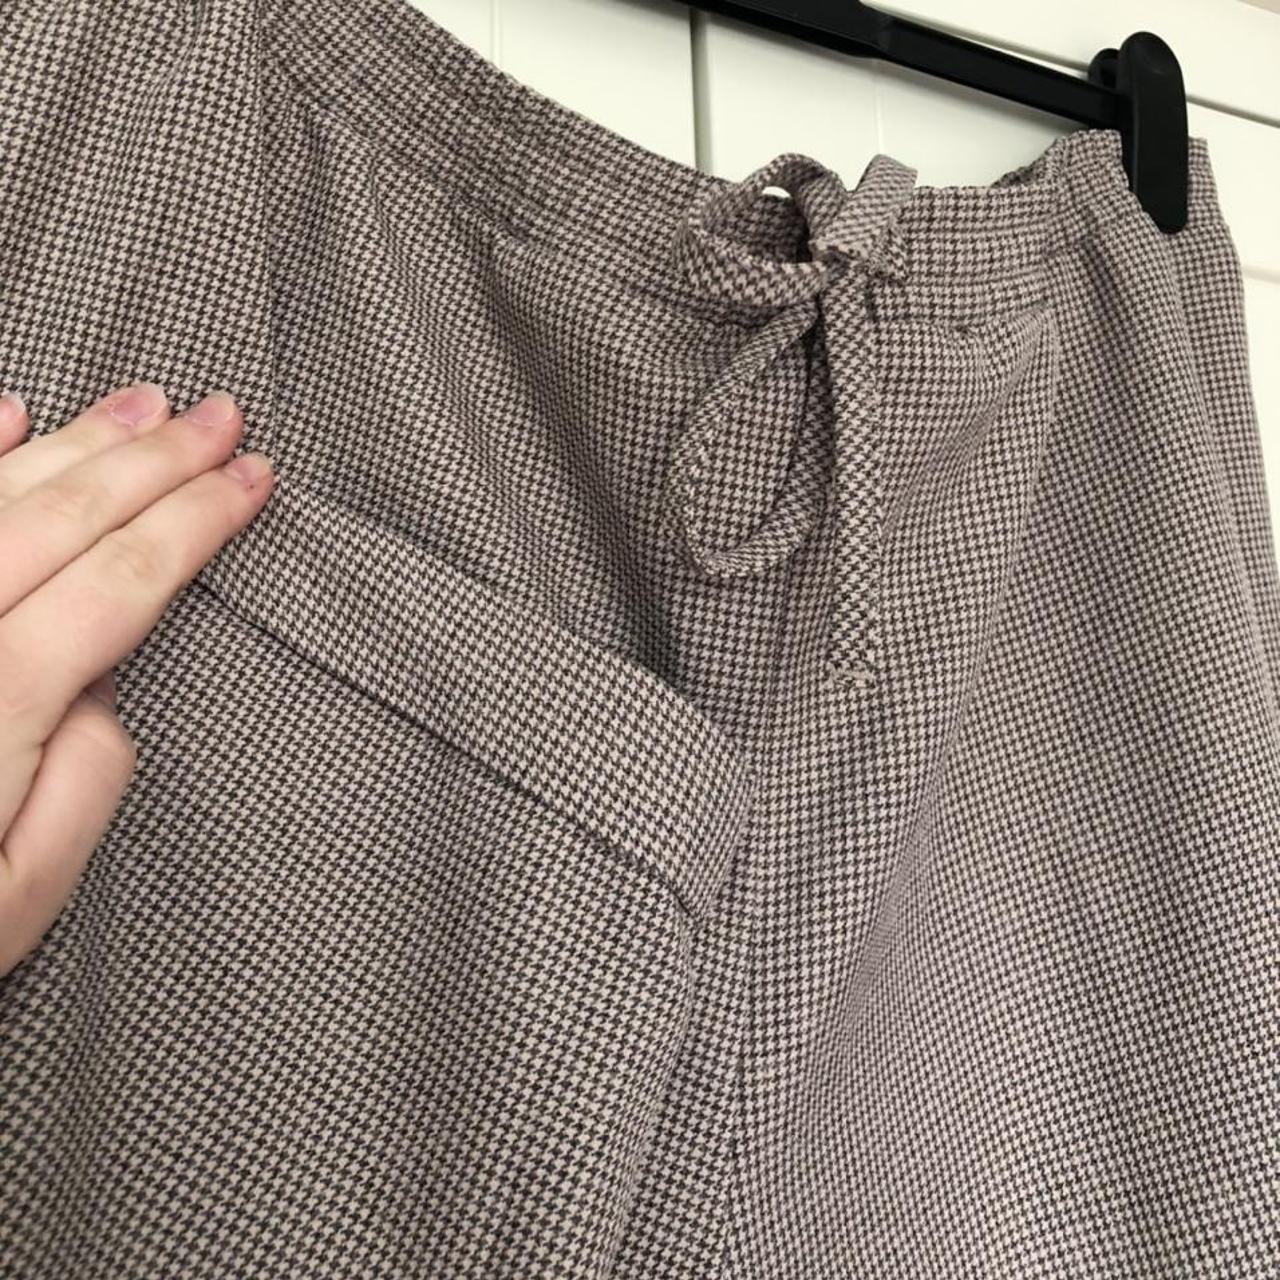 Sainsbury's TU Women's Grey and Cream Trousers | Depop